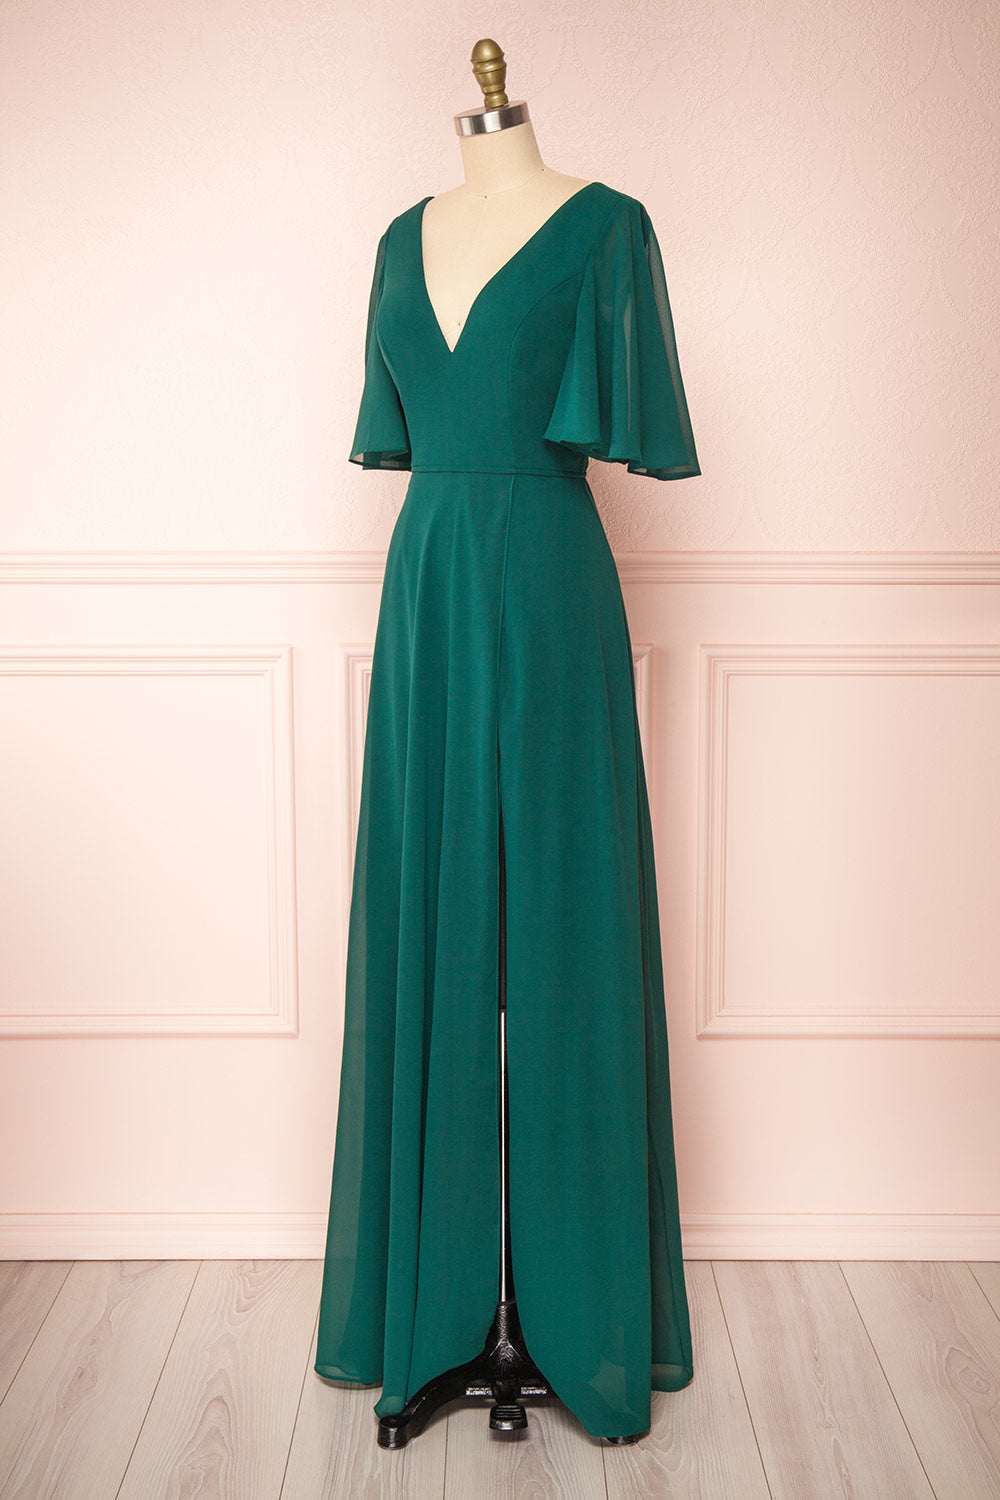 Adelphia Green V-Neck Chiffon Maxi Dress | Boutique 1861